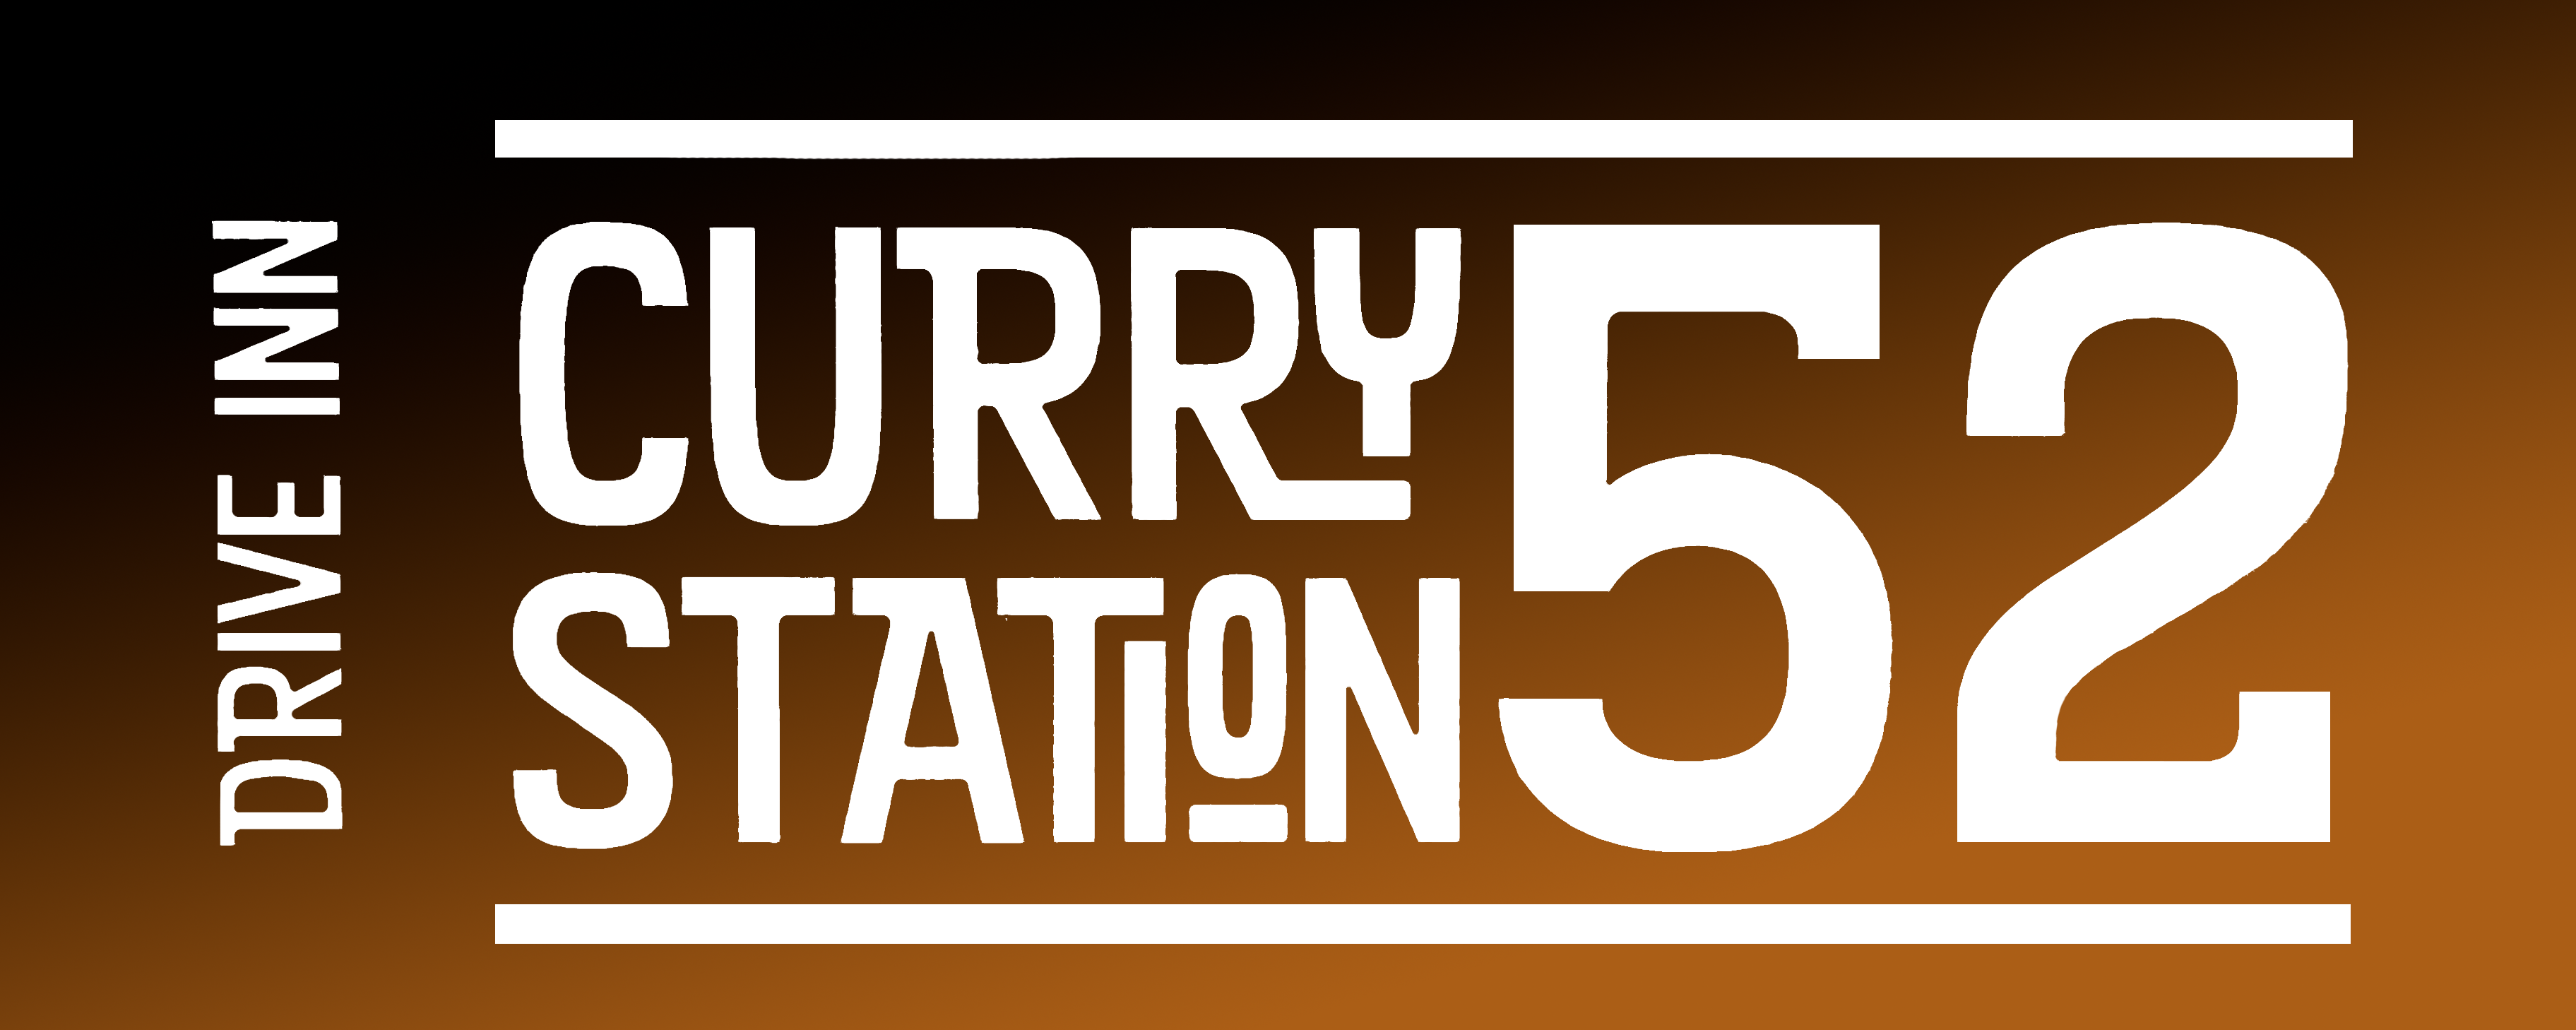 CurryStation 52